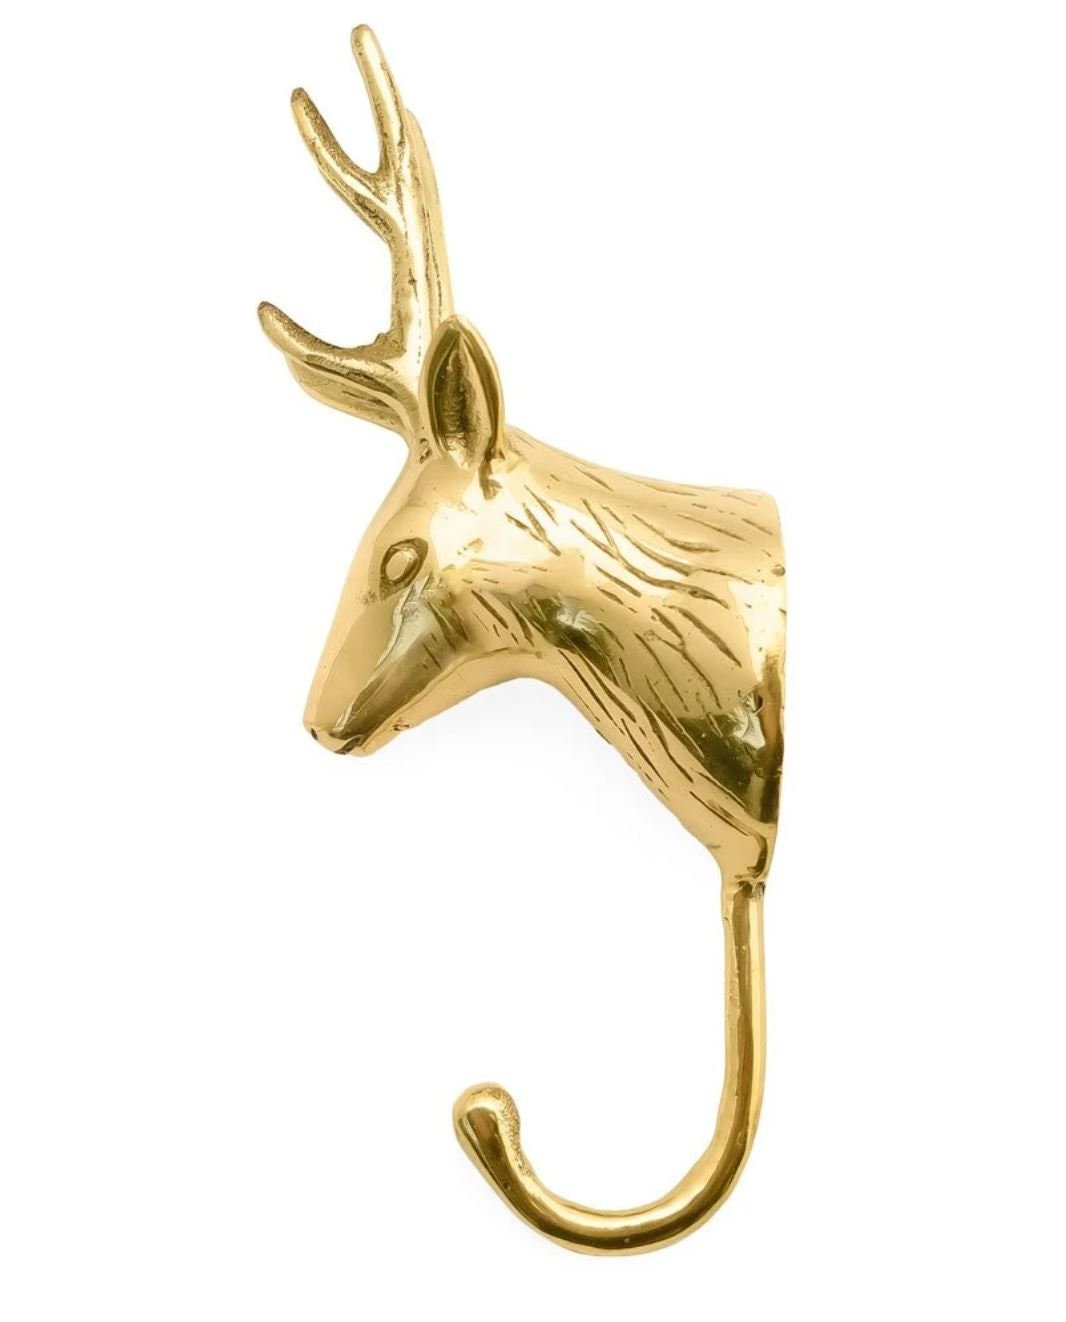 Brass Hook / Wall Hook / Nursery Hook / Gold Homewares / Animal Head Hook / Decorative  Hook / Safari Decor / Gold Details / Home Accents 